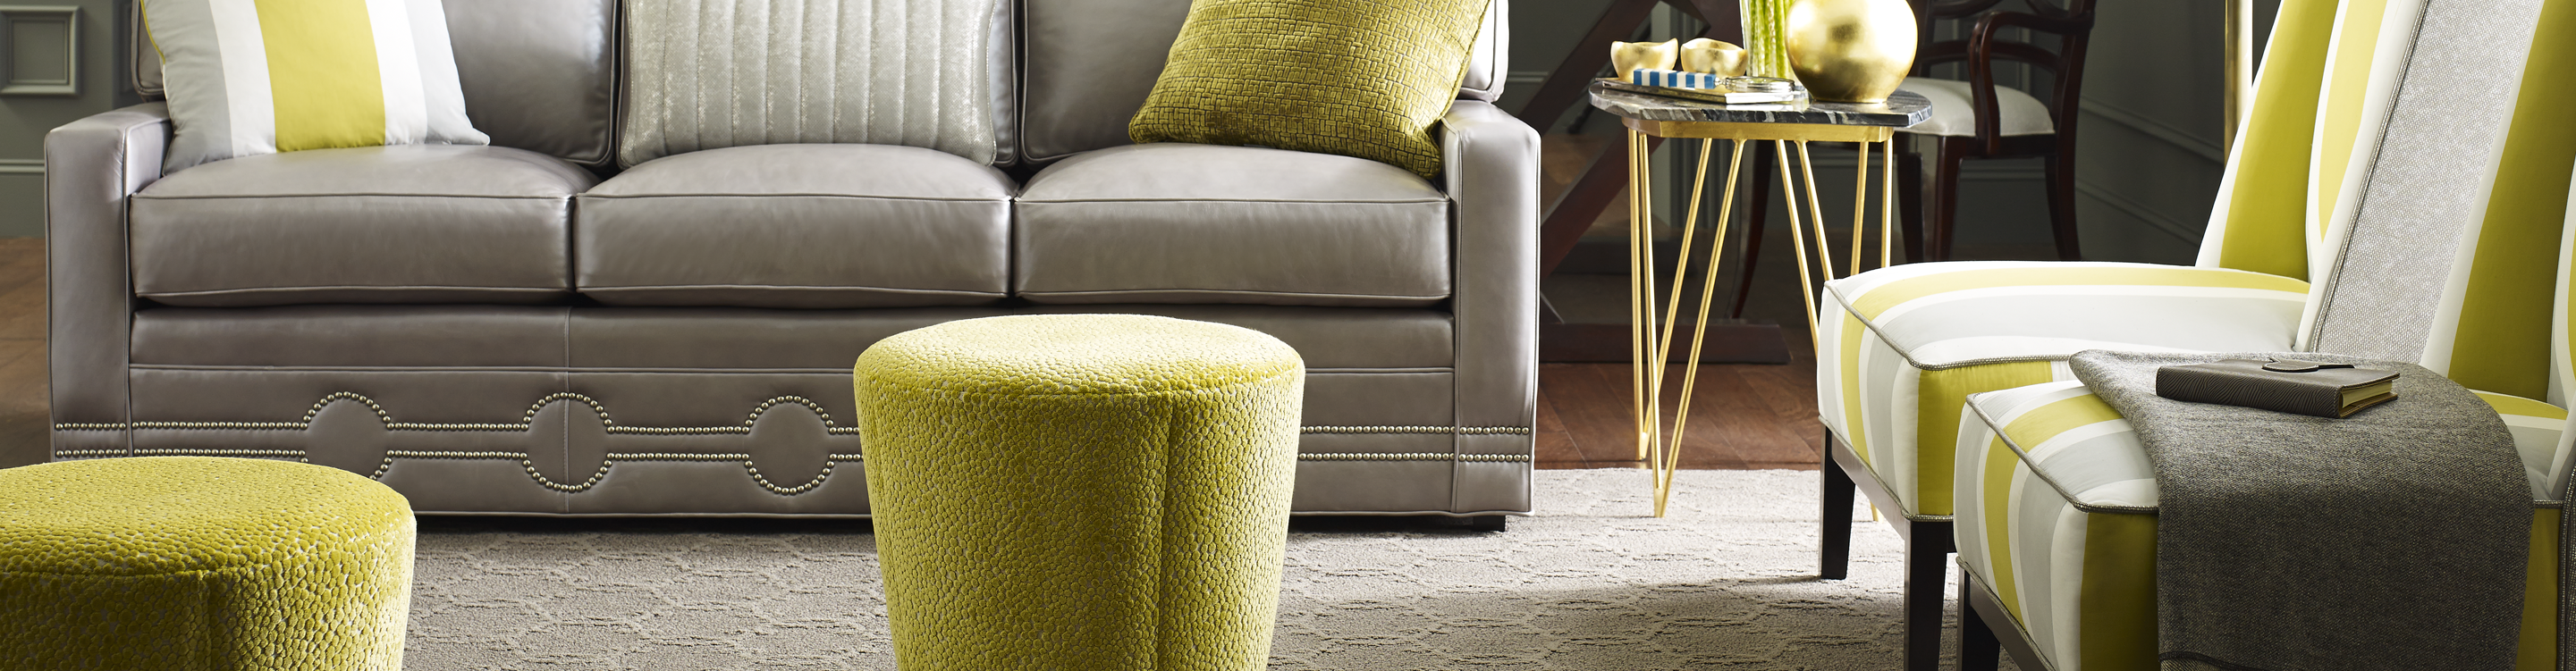 living room with grey sofa and tan area rug over hardwood floors